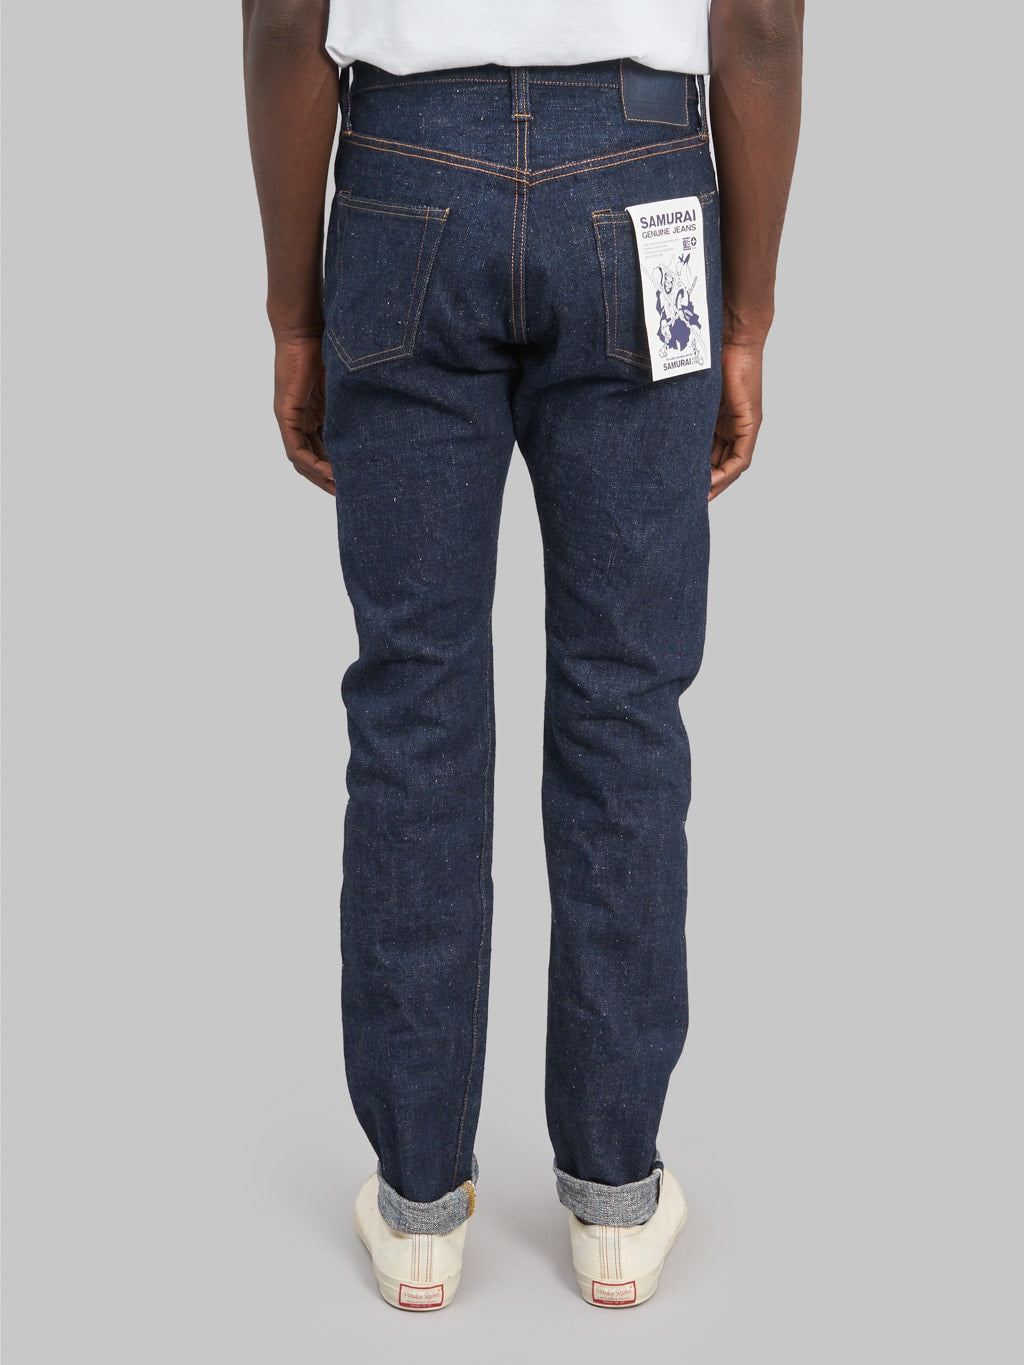 samurai jeans s211ax ai benkei natural indigo 18oz relaxed tapered jeans back